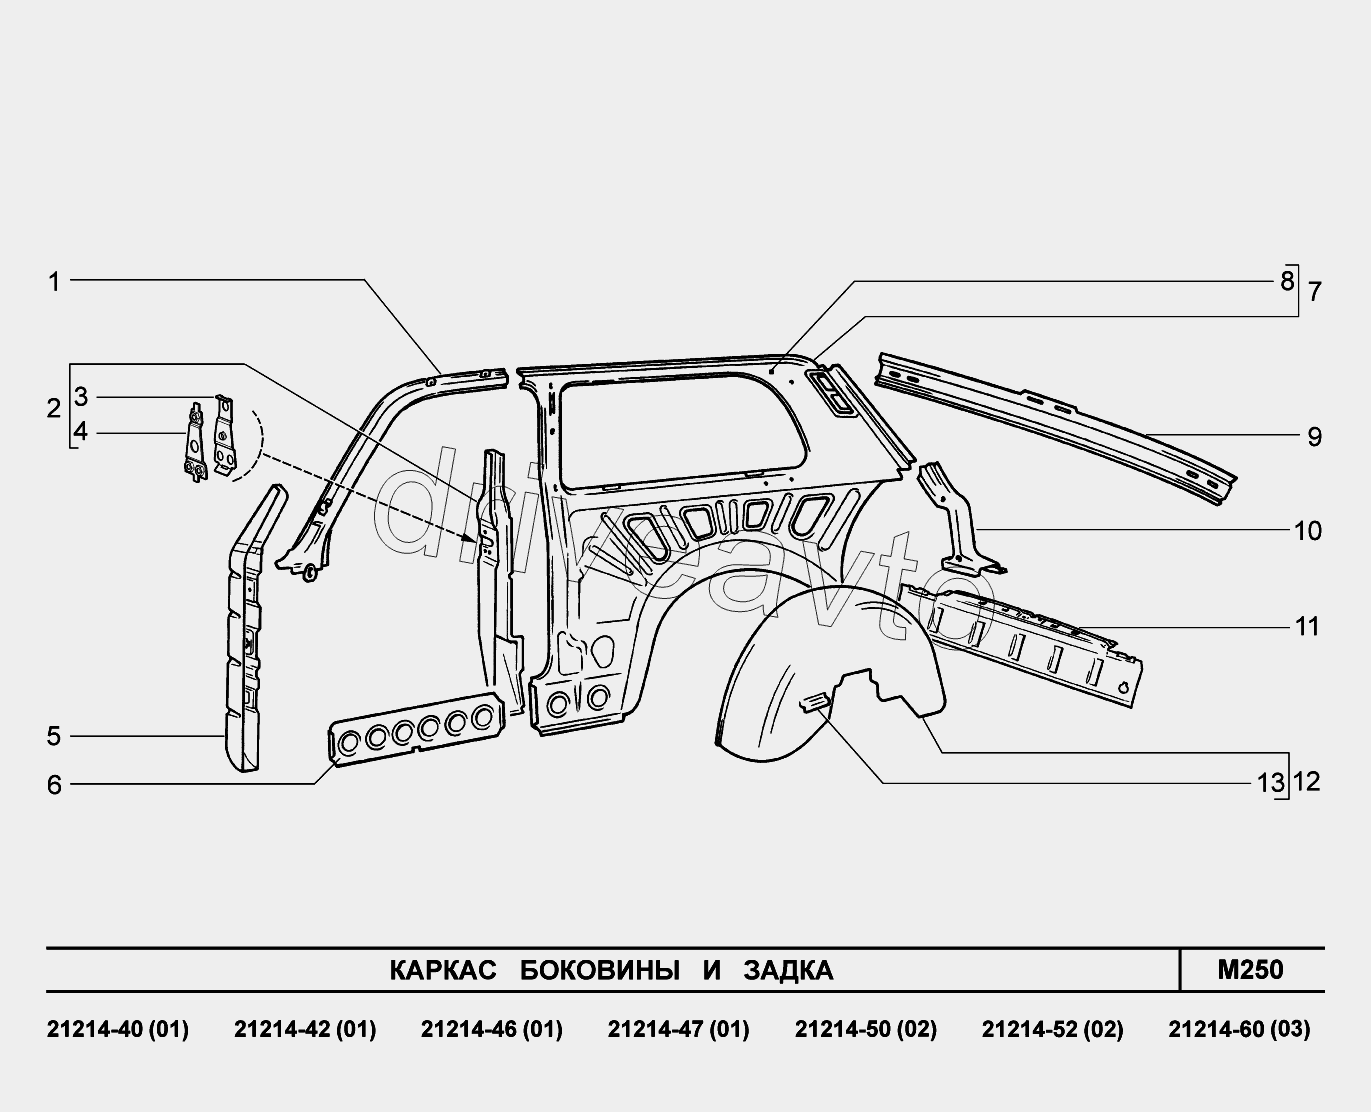 M250. Каркас боковины и задка